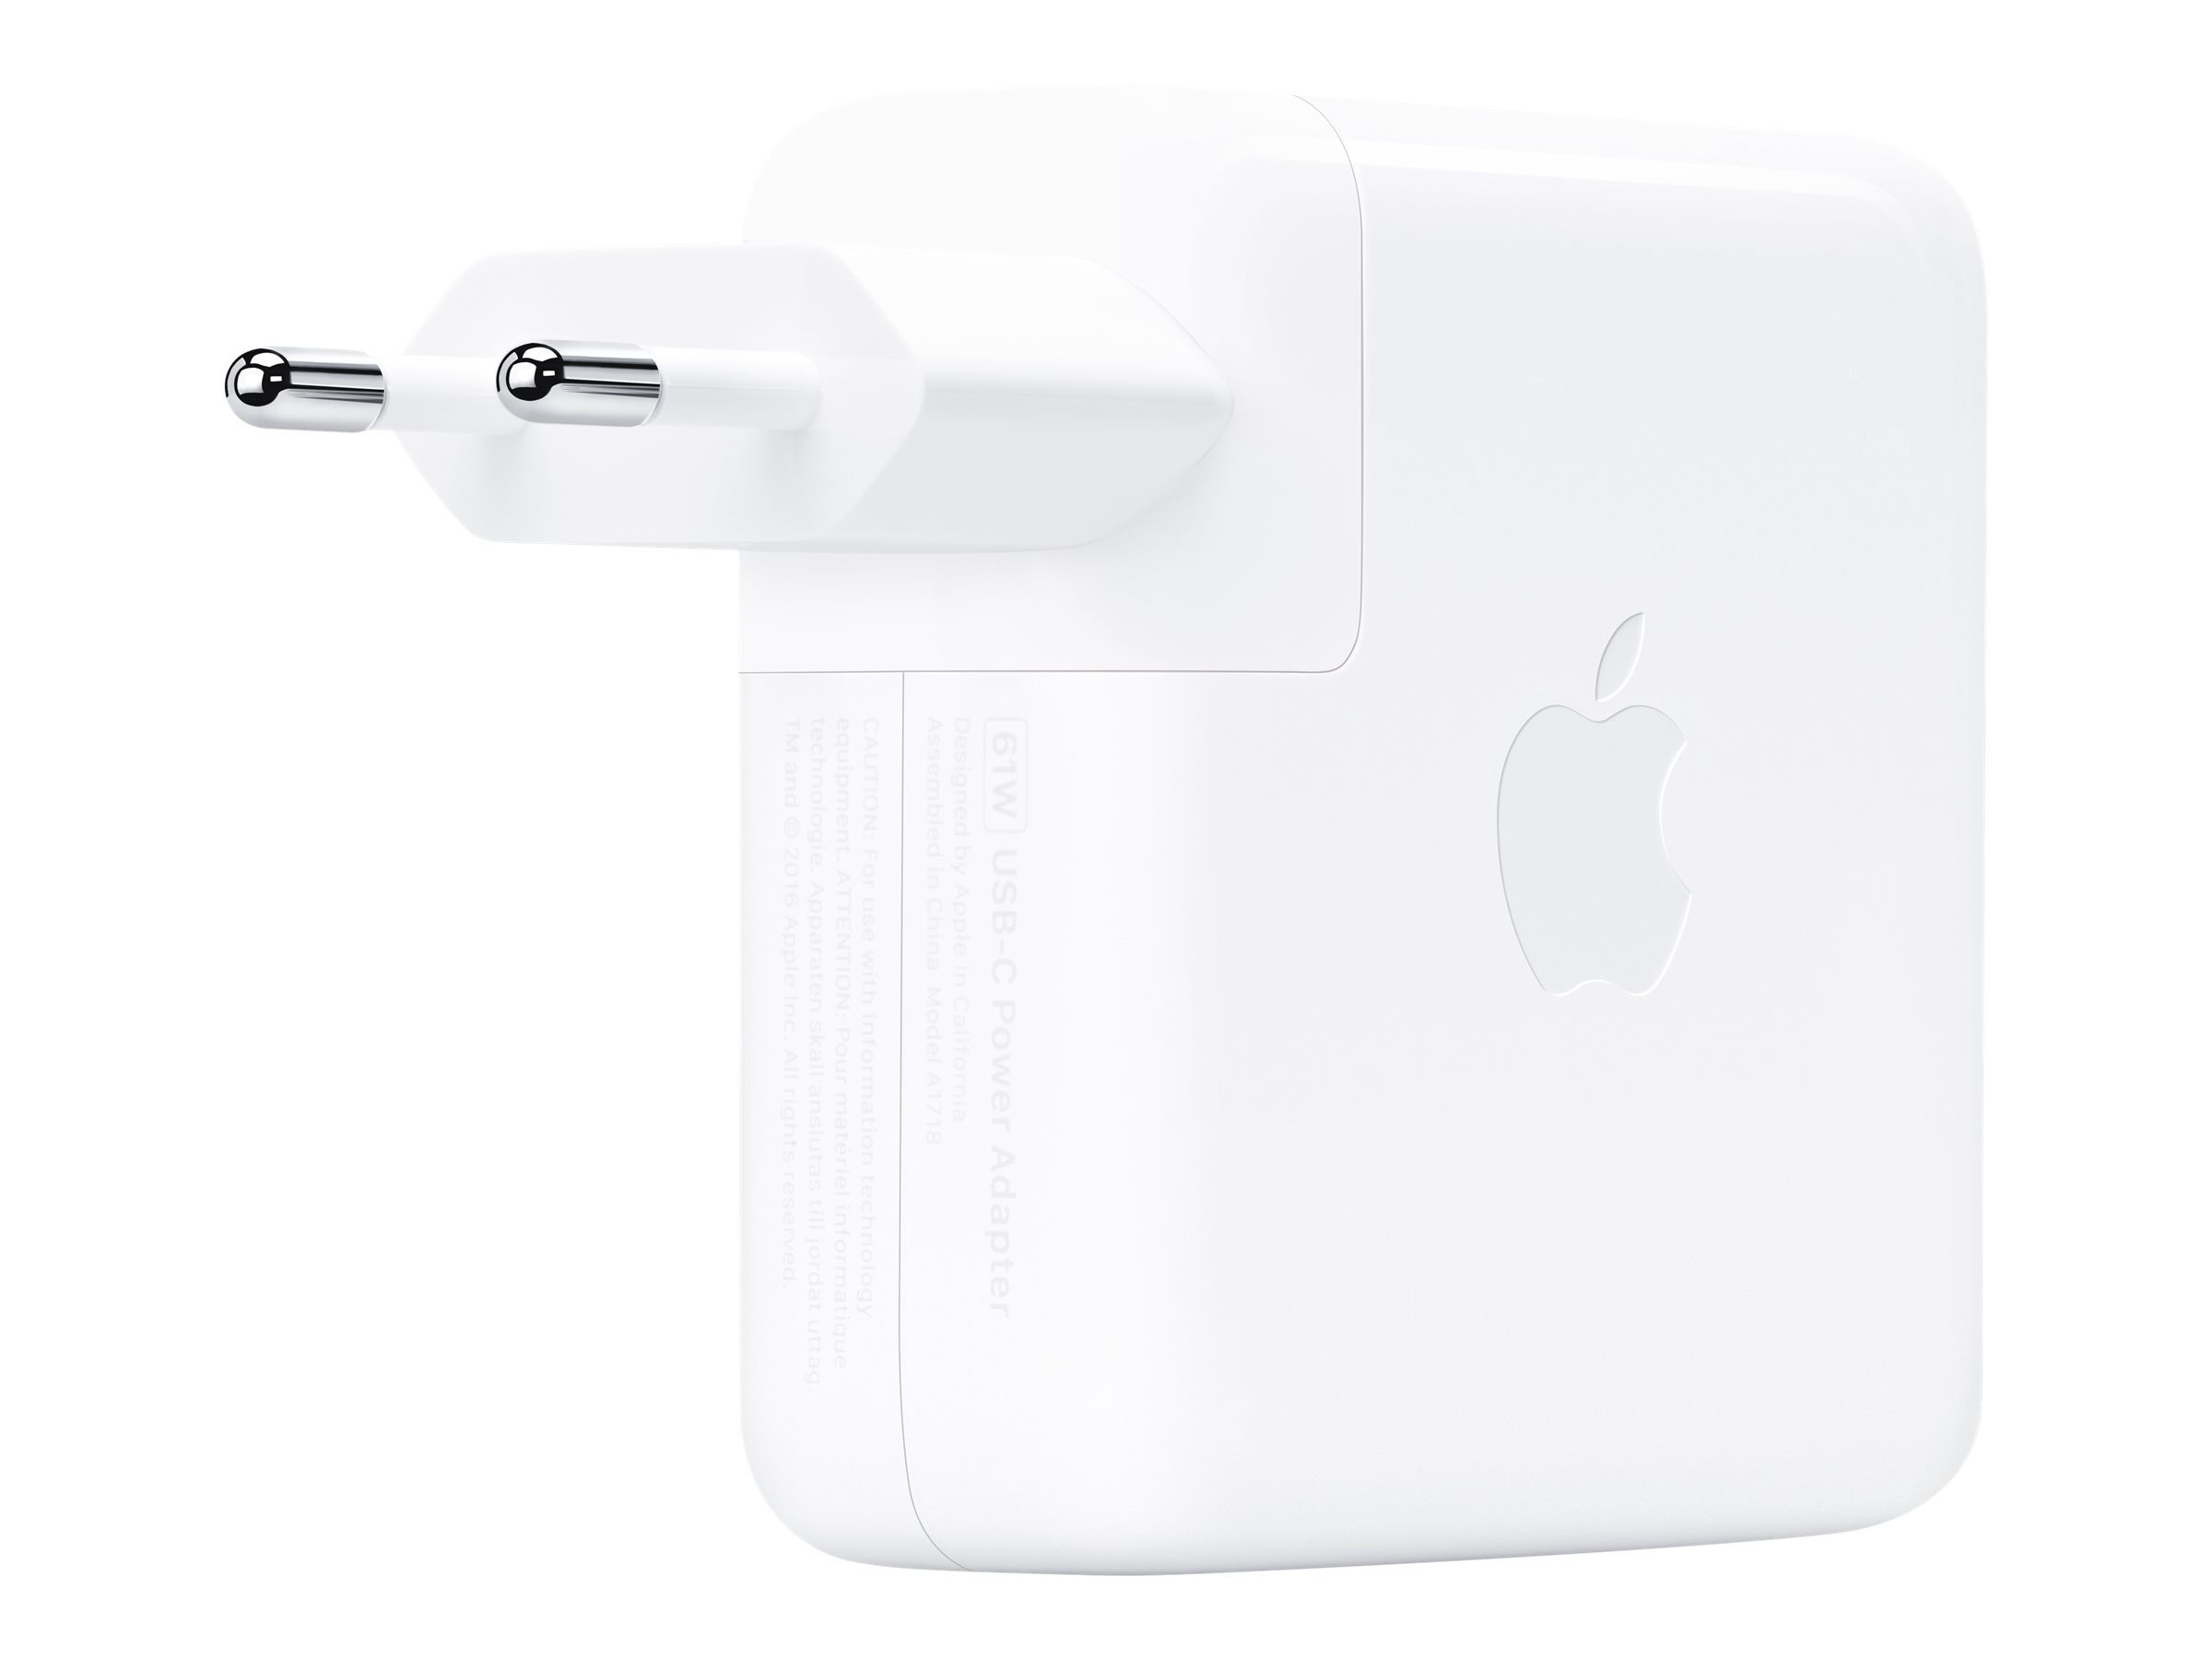 Apple USB-C - Netzteil - 61 Watt - für MacBook (Early 2015, Early 2016, Mid 2017)